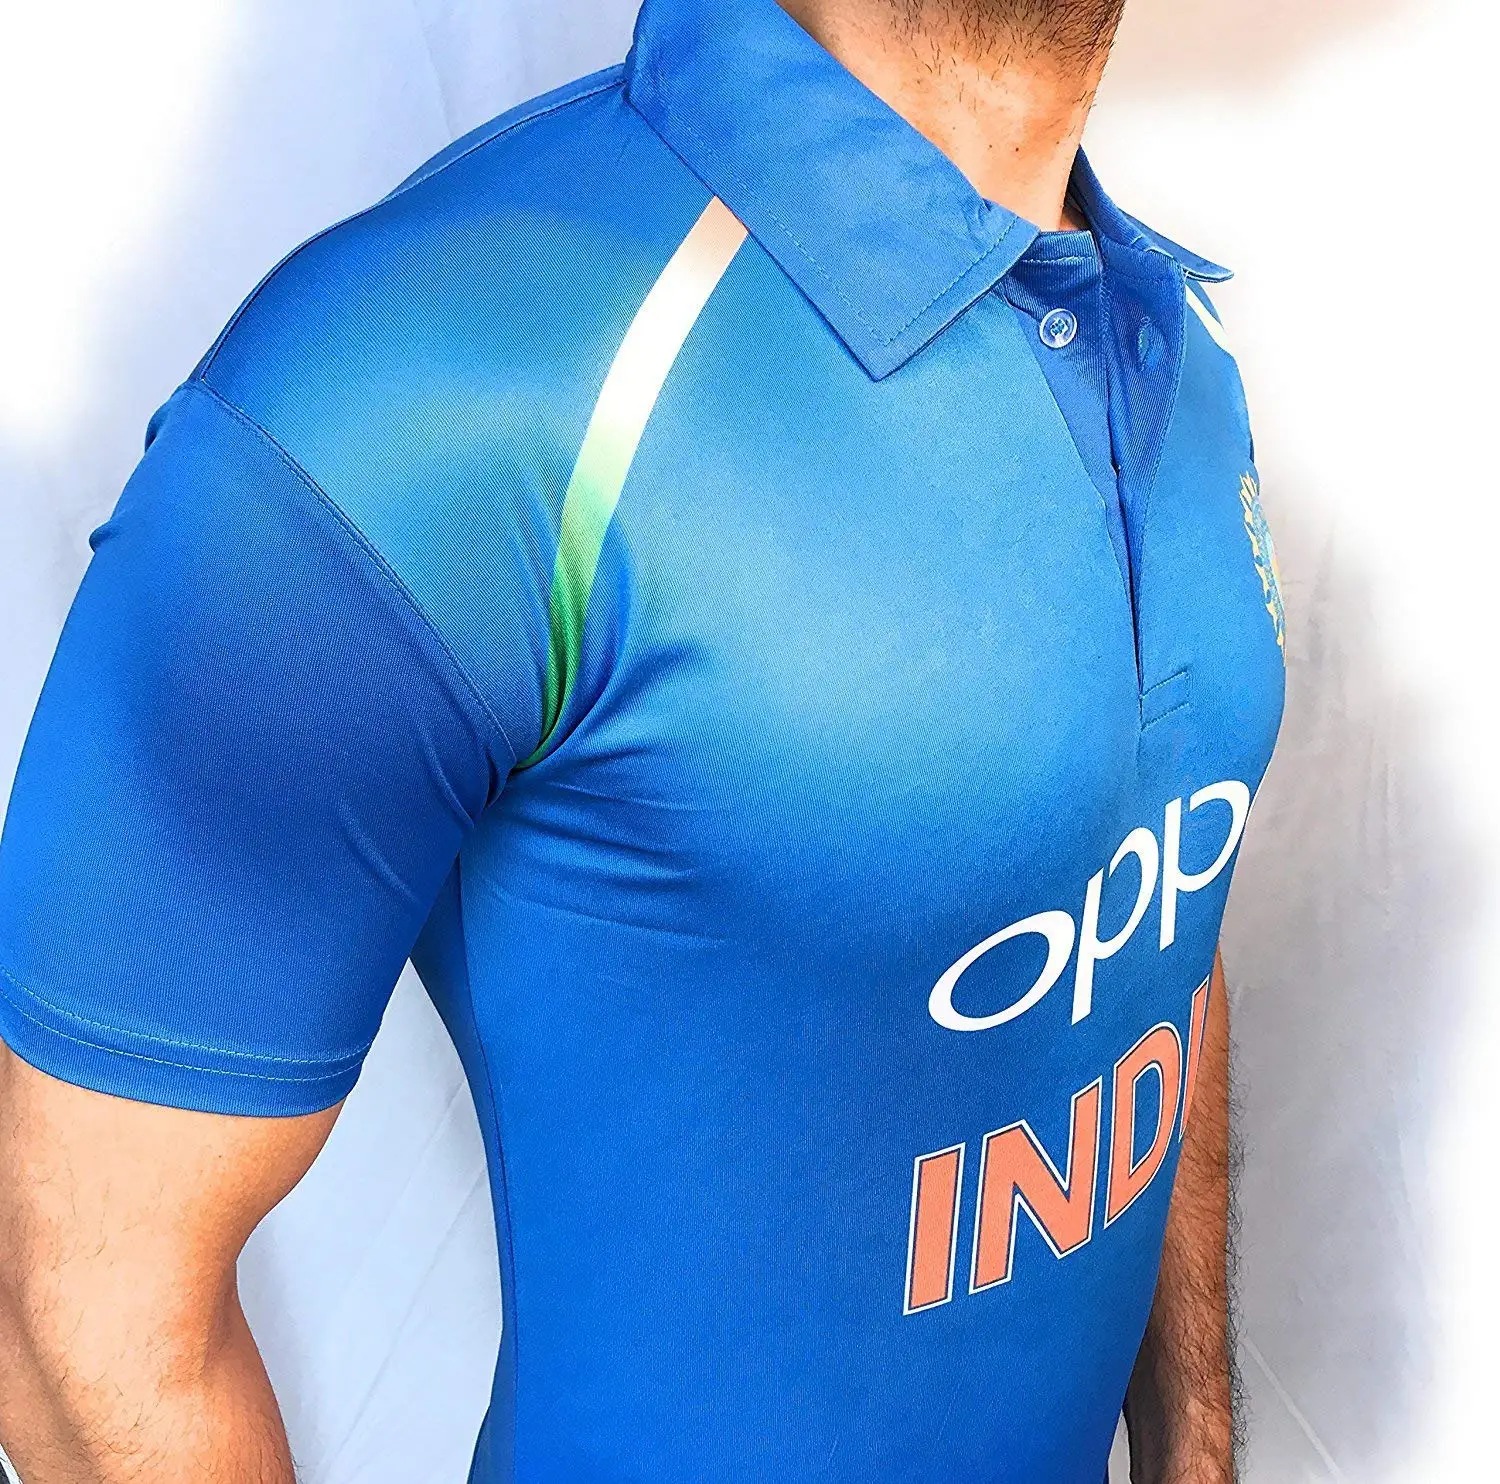 nike india cricket jersey price